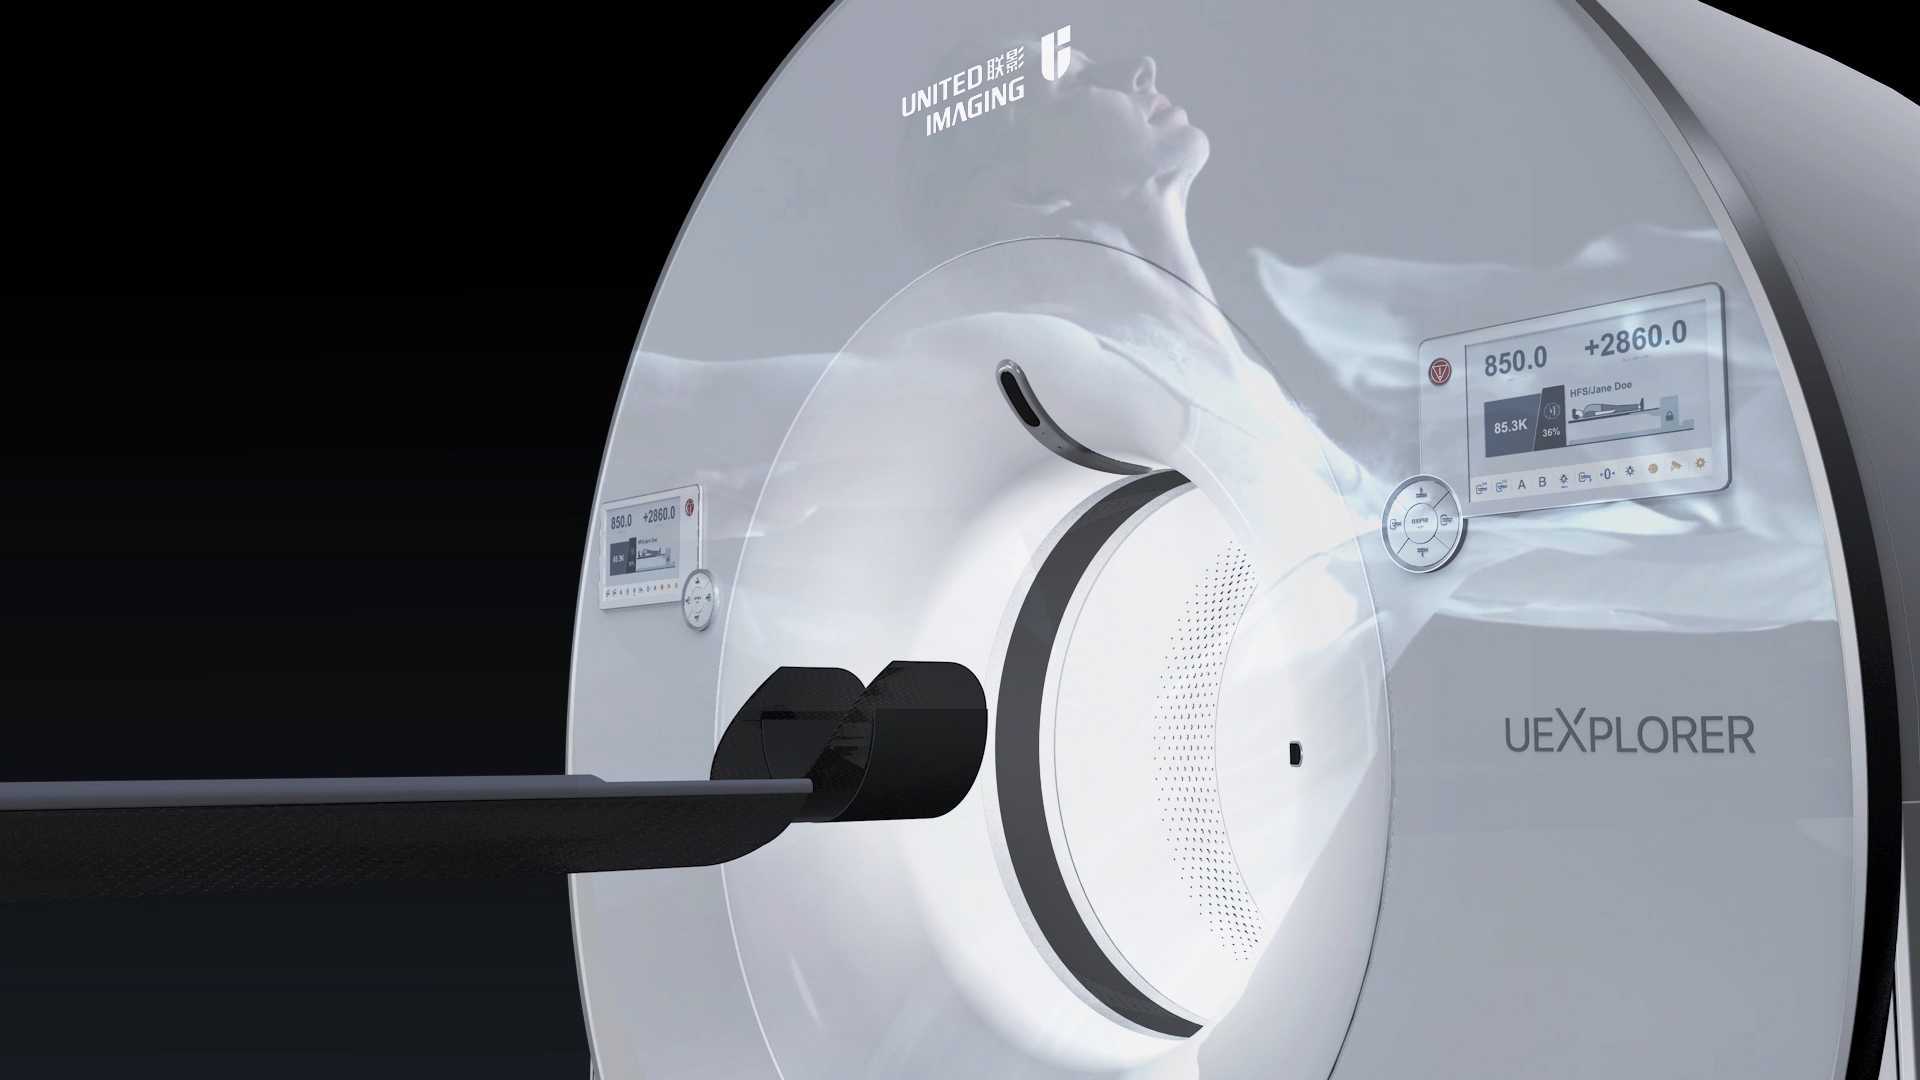 世界首款Total-body PET-CT uEXPLORER